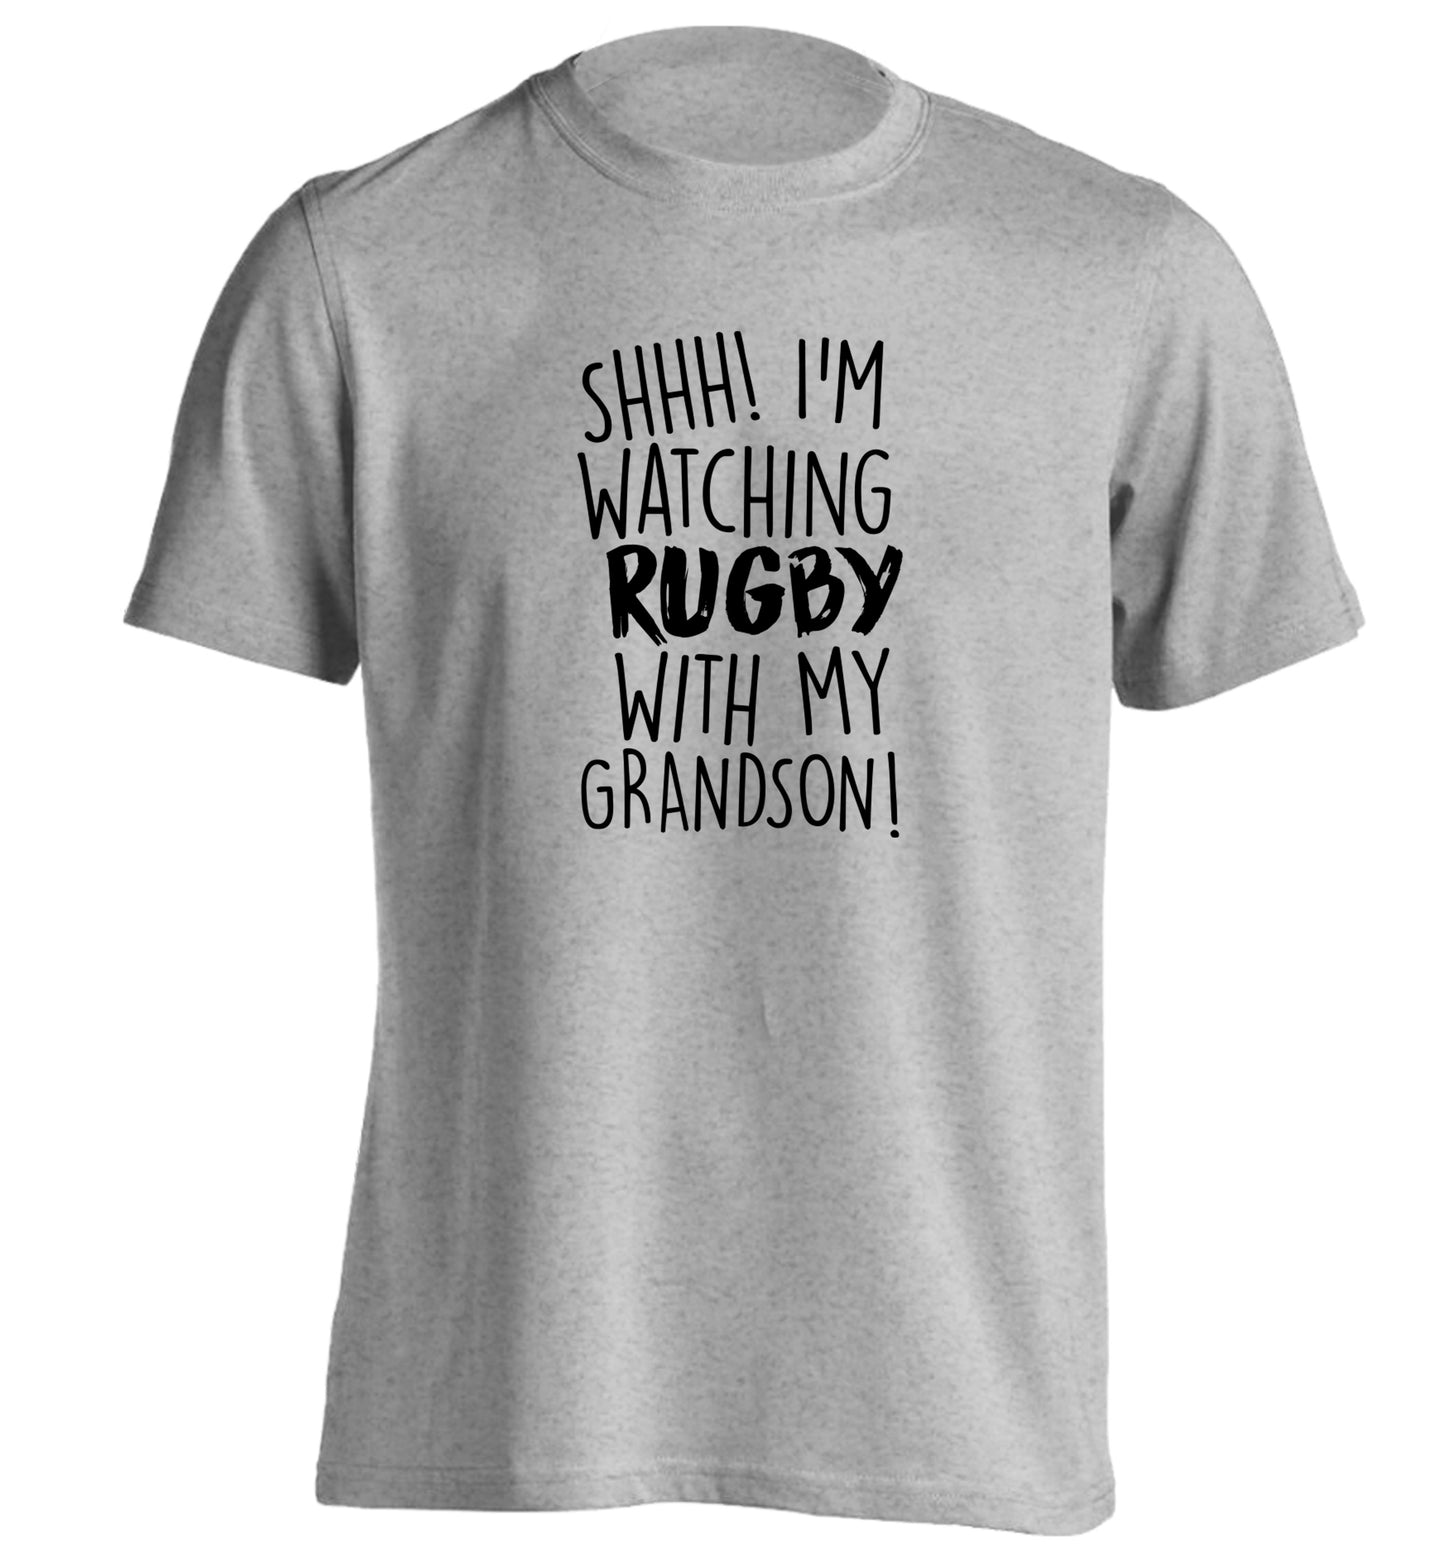 Shh I'm watching rugby with my grandson adults unisex grey Tshirt 2XL